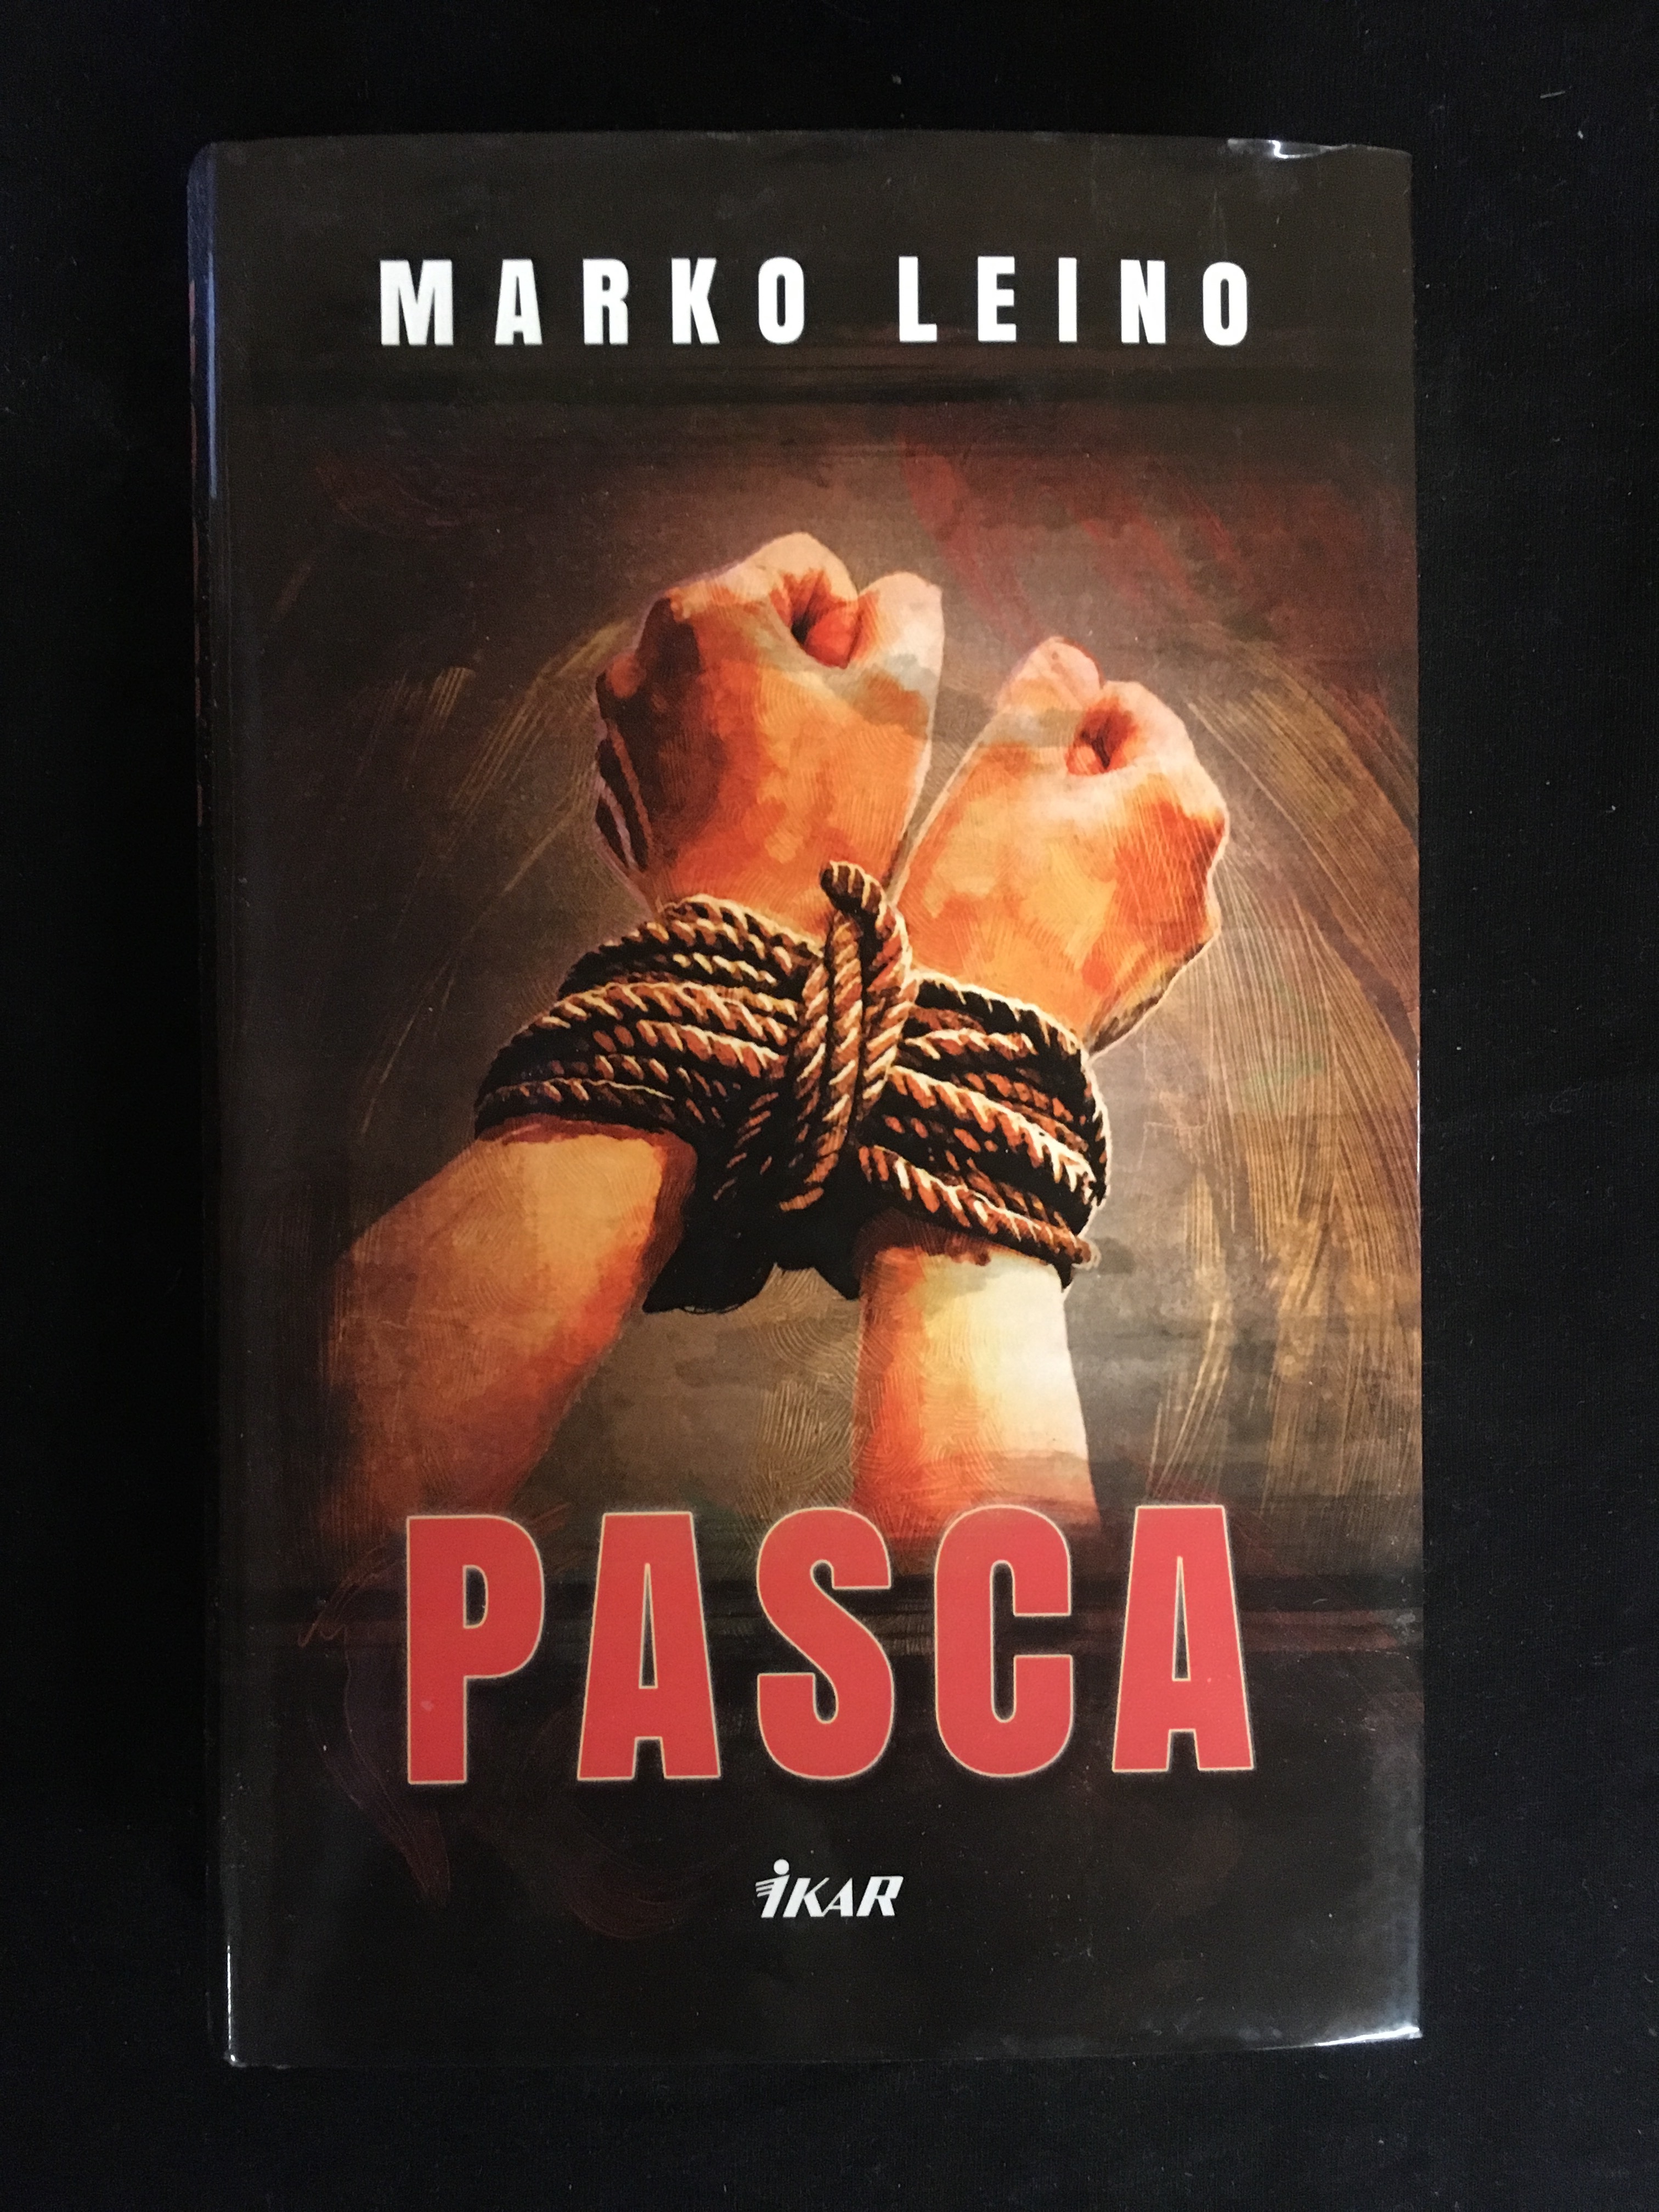 Marko Leino-Pasca